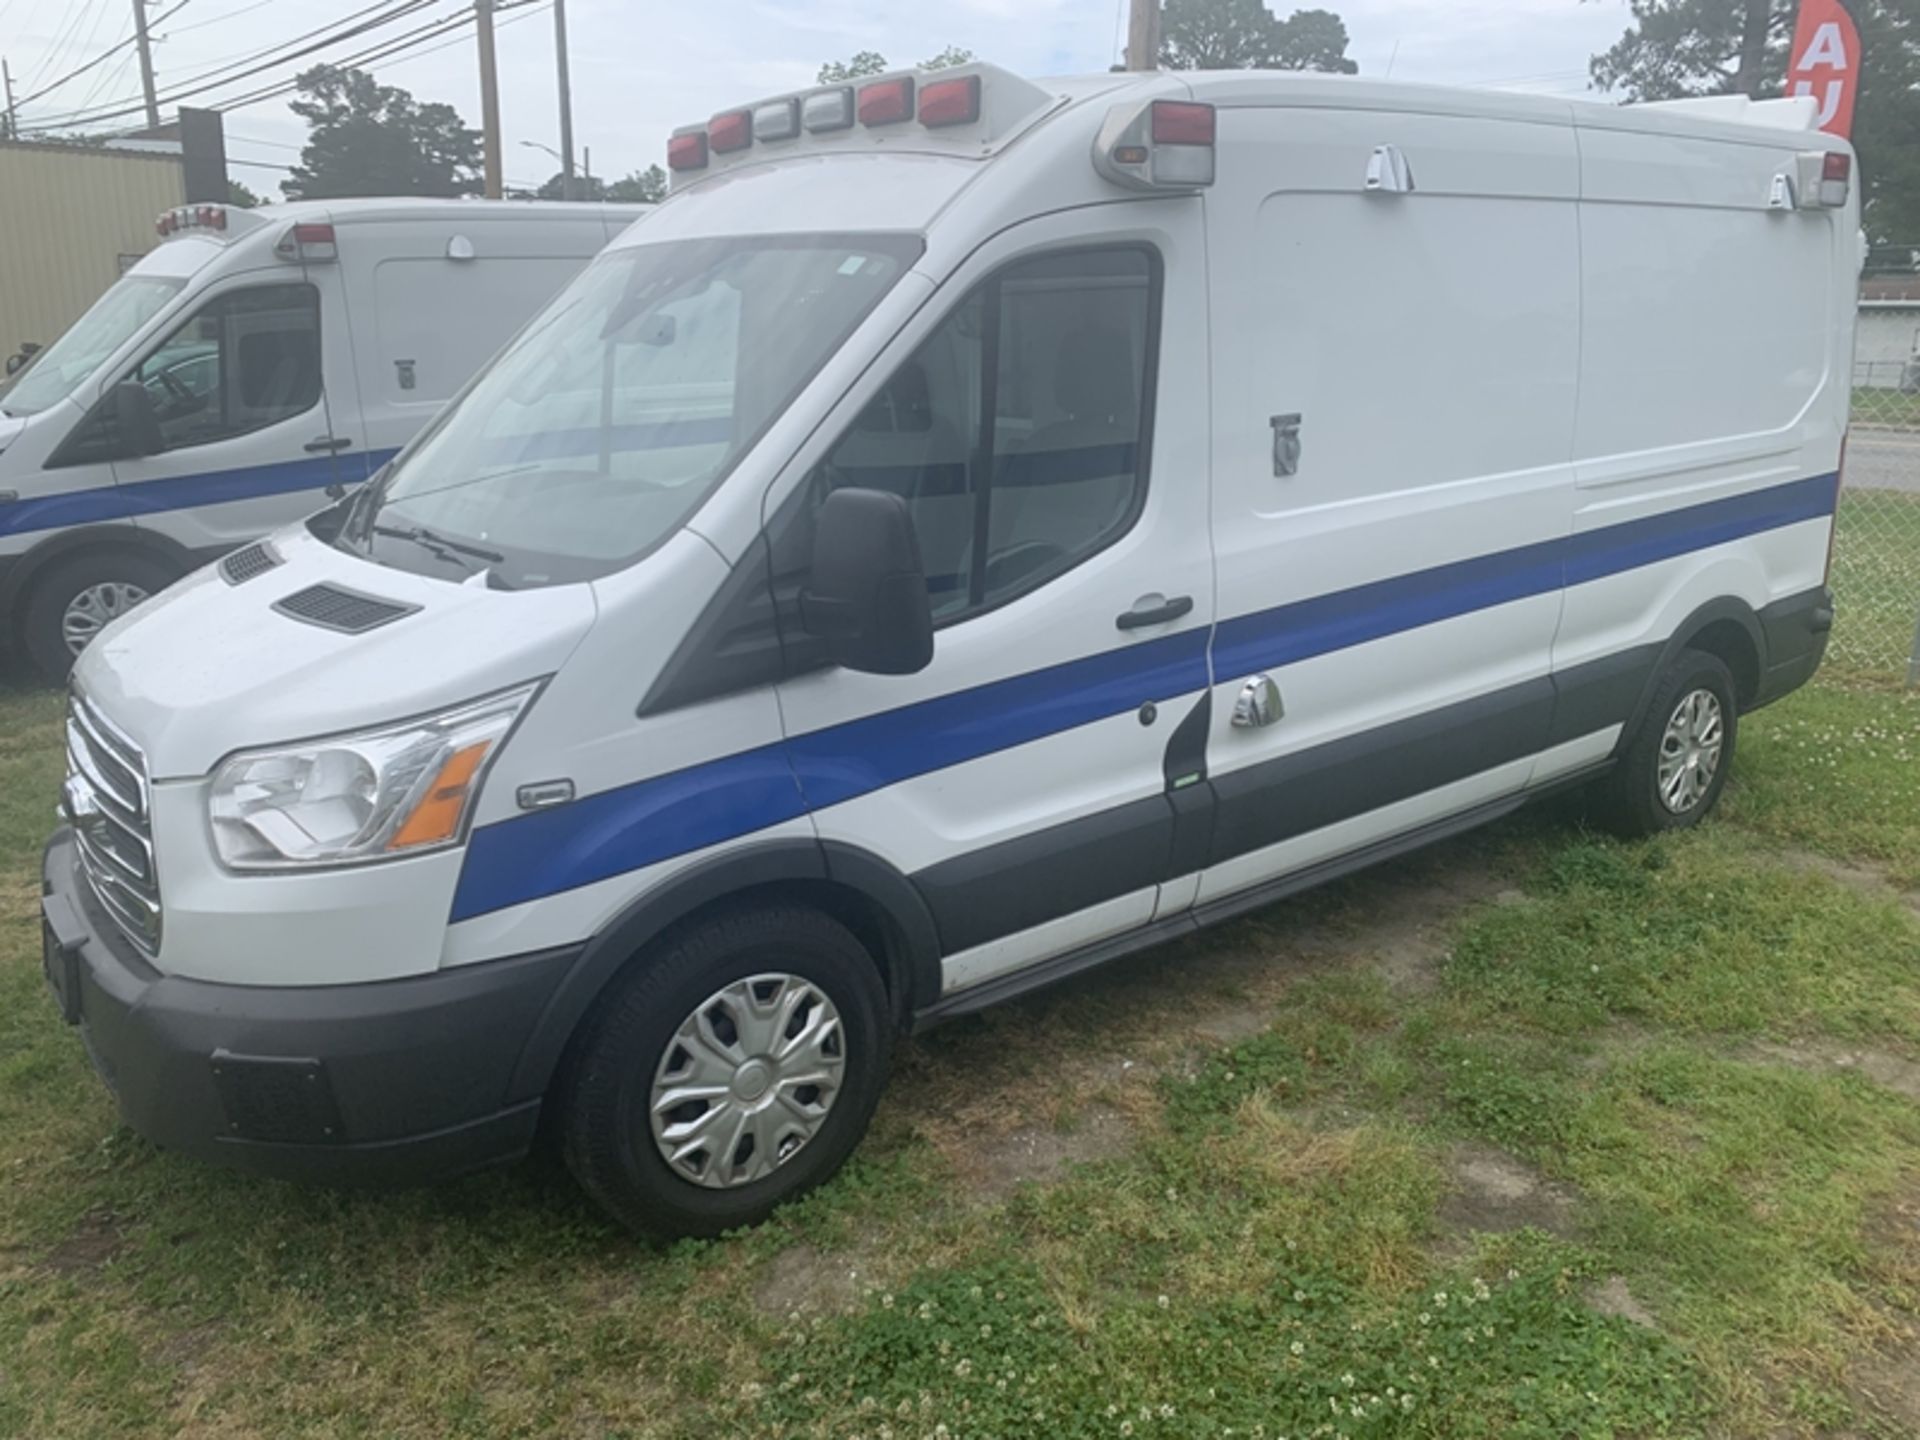 2018 FORD Transit 350 Sprinter Van, Type II Ambulance, 3.2L dsl - 203,339 miles - VIN: